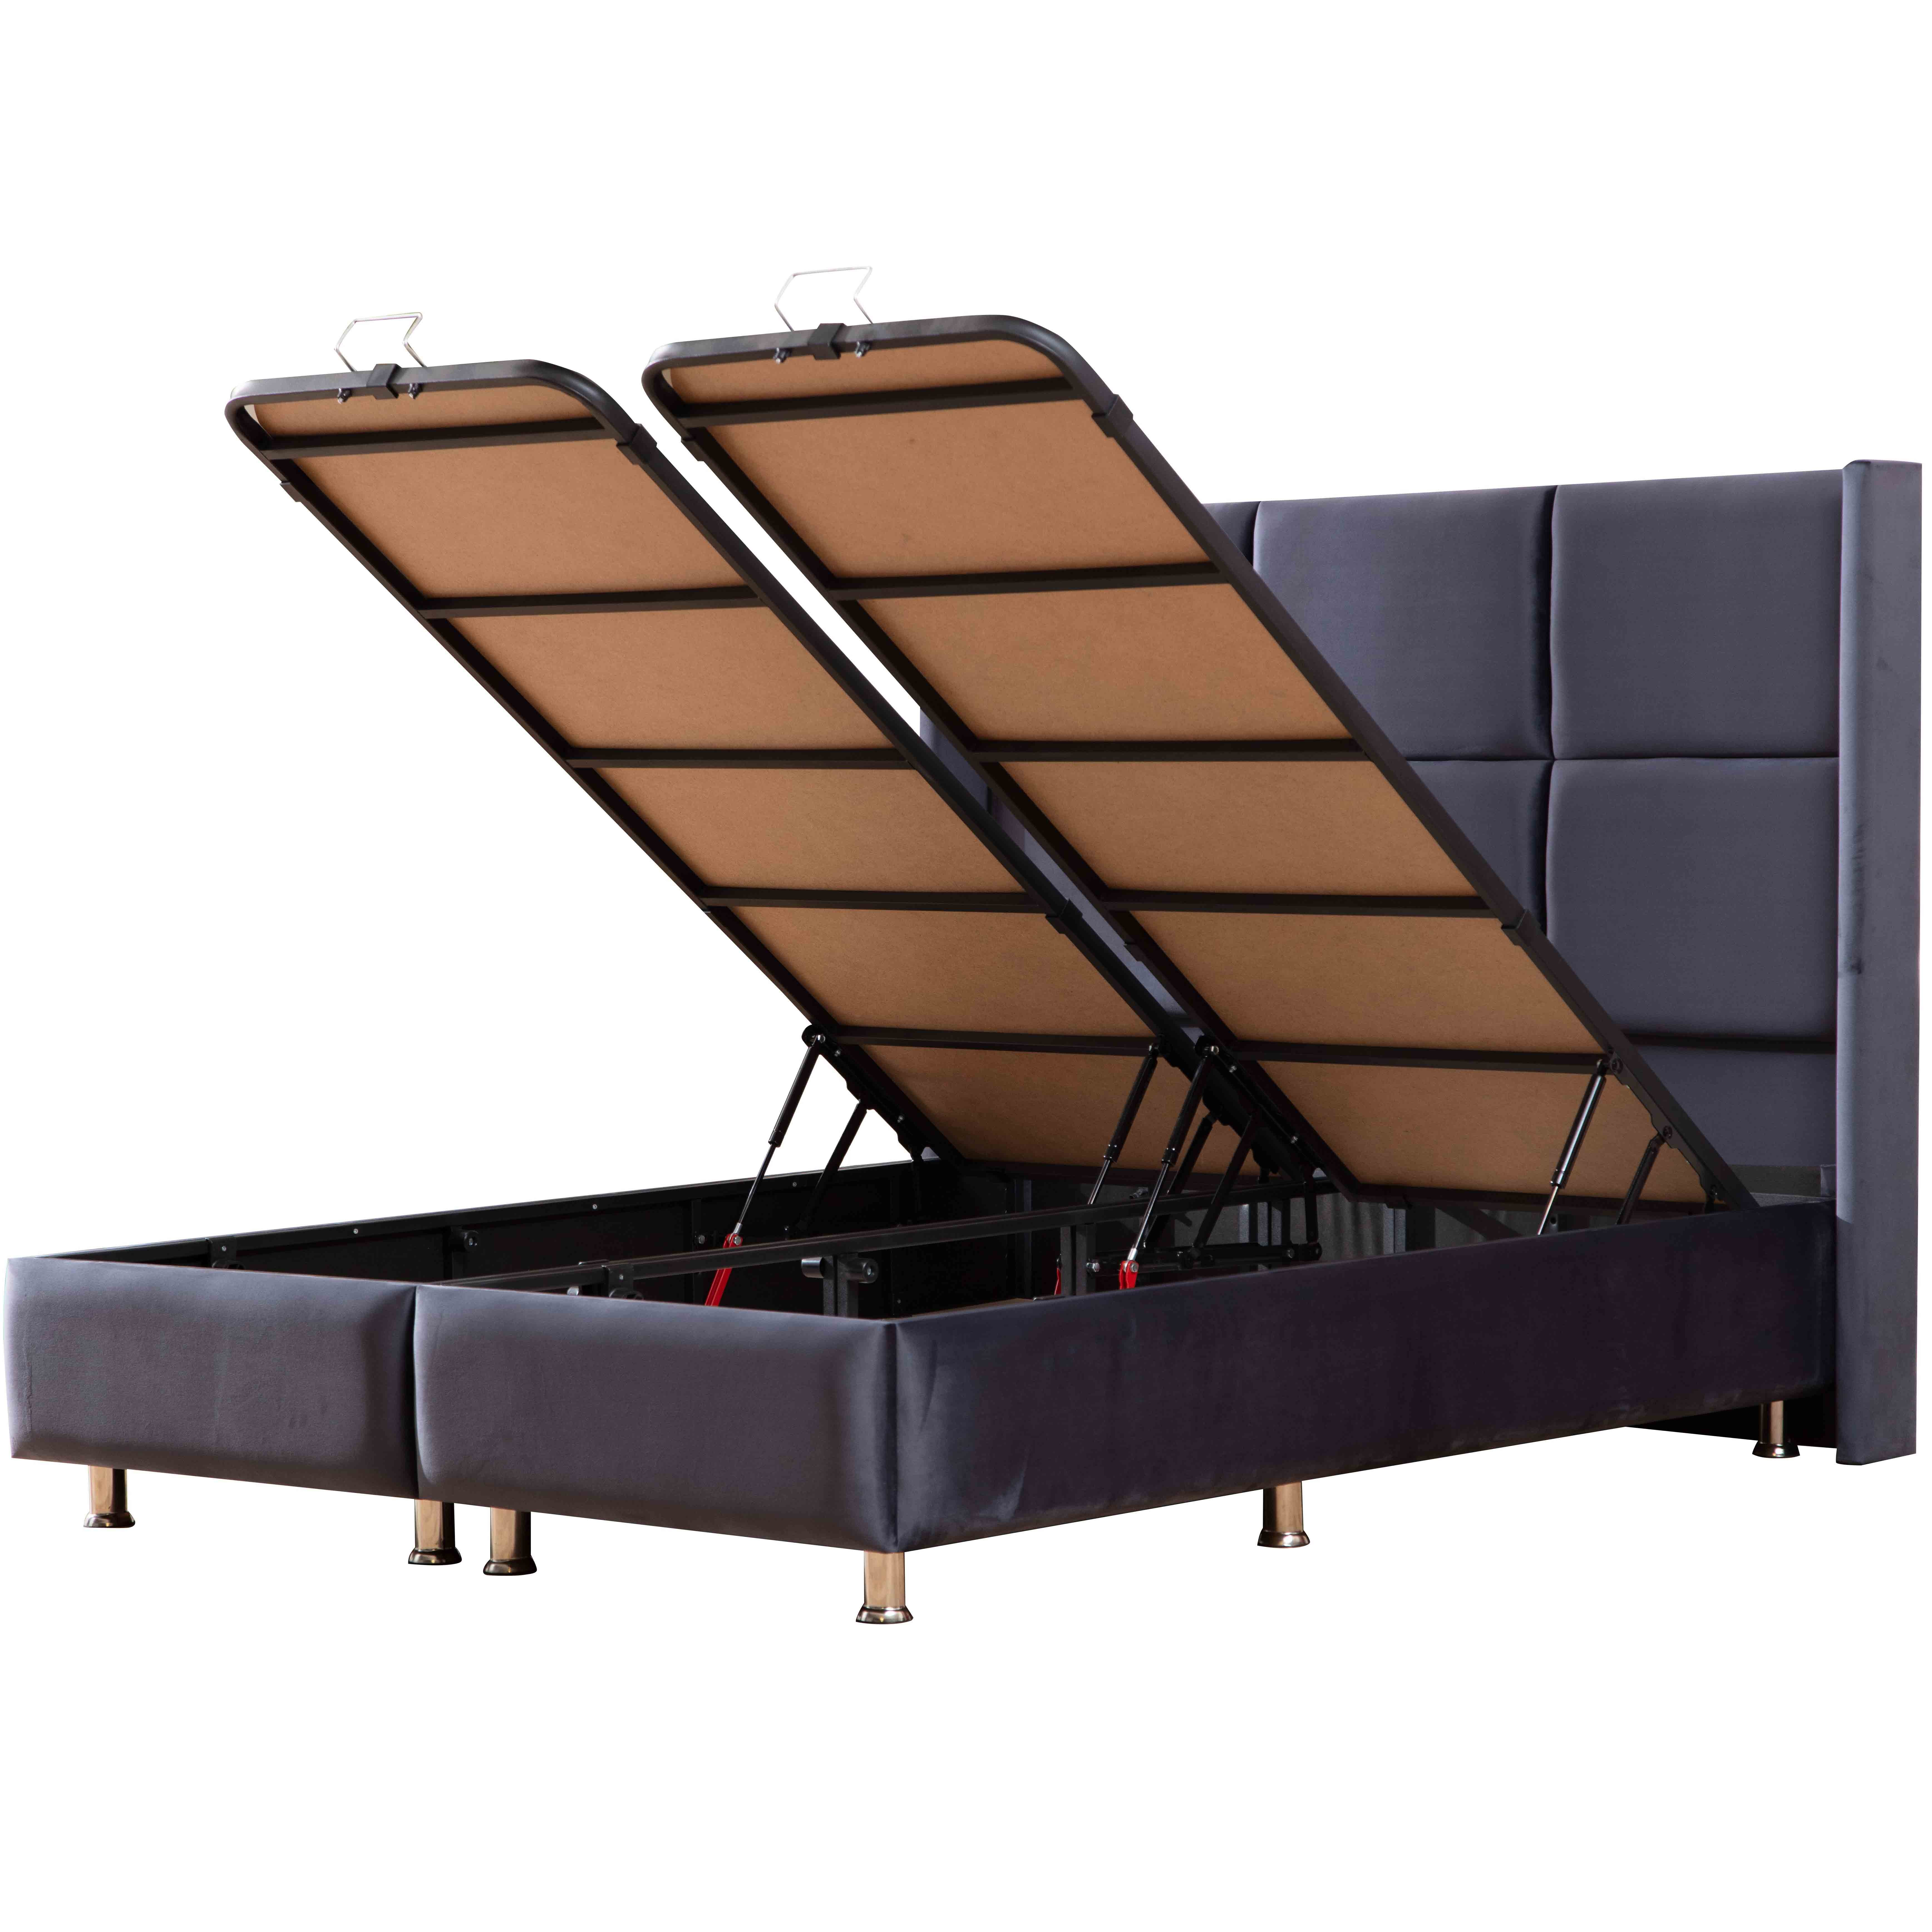 Lyon Bed With Storage 120x200 cm